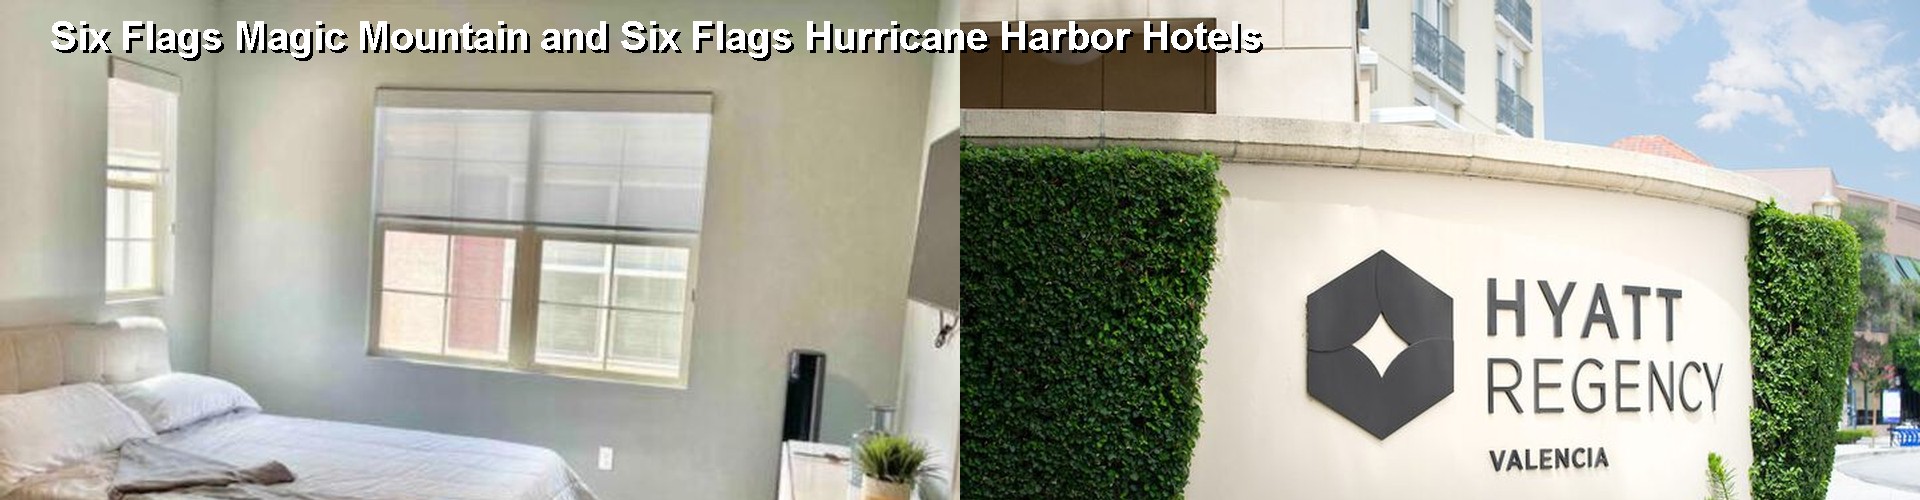 4 Best Hotels near Six Flags Magic Mountain and Six Flags Hurricane Harbor